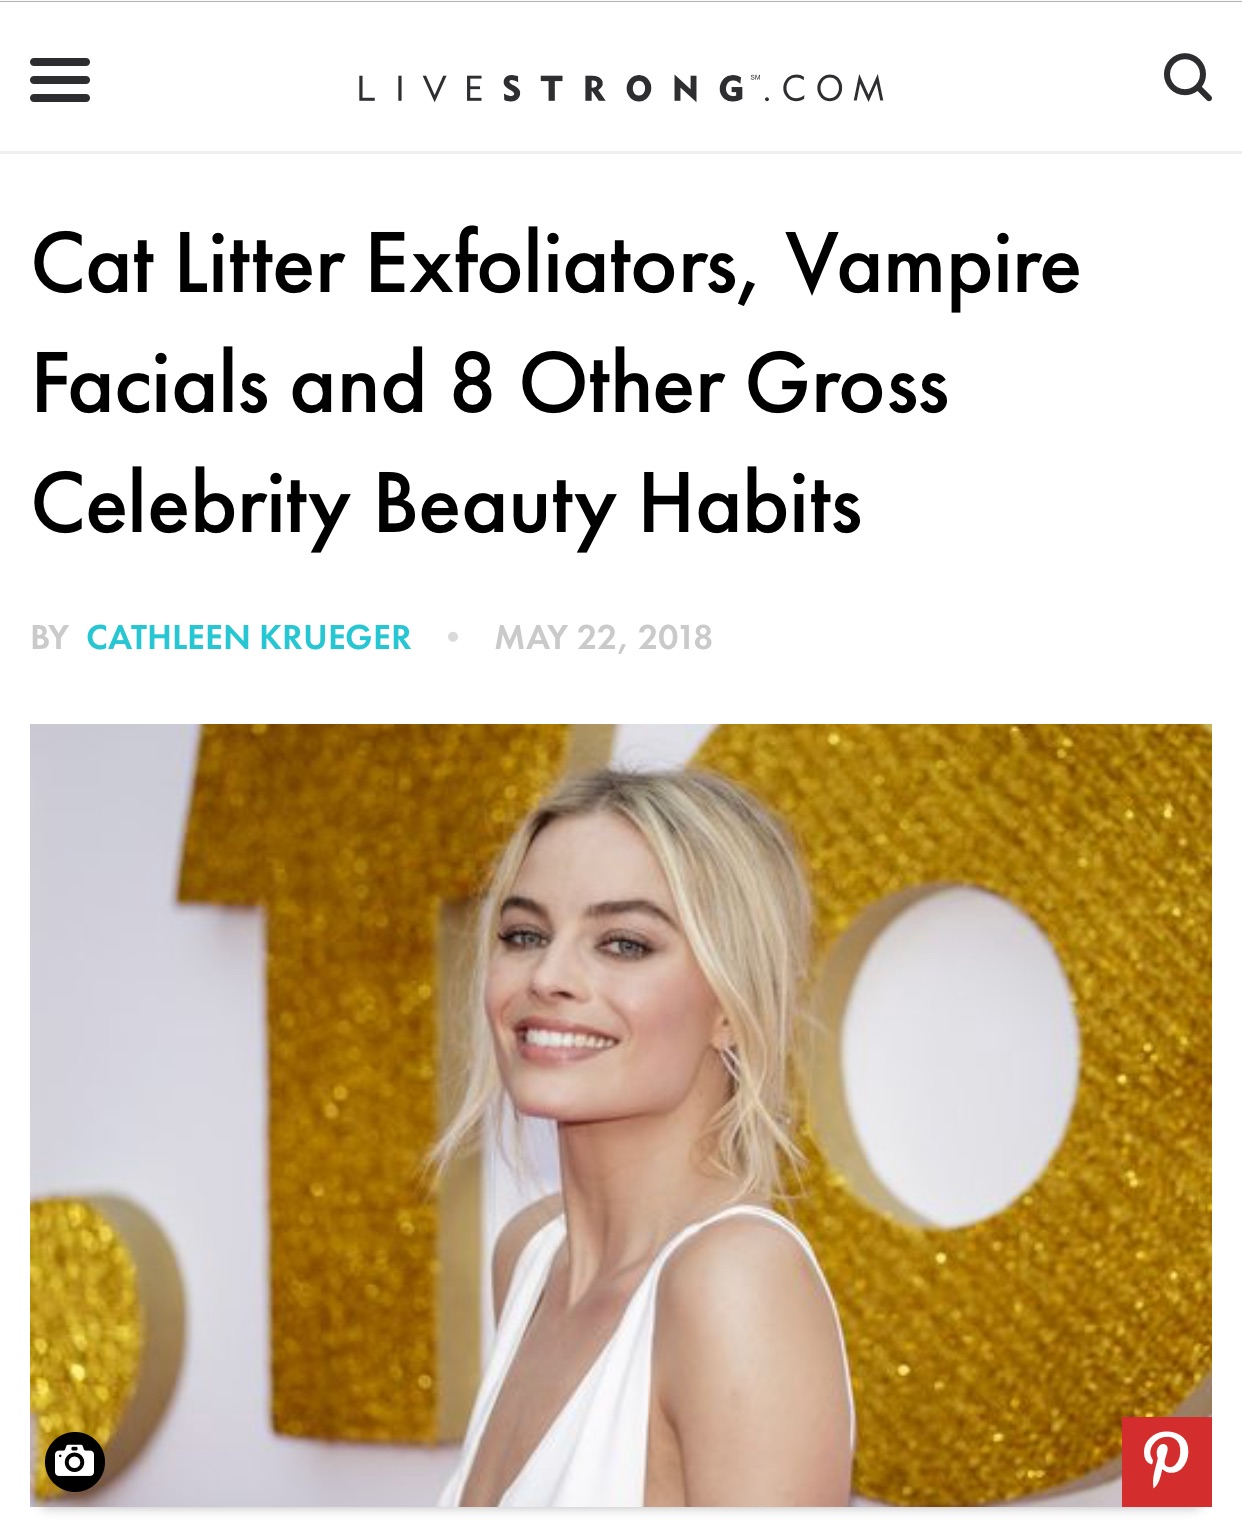 Livestrong.com: Cat Litter Exfoliators, Vampire Facials and 8 Other Gross Celebrity Beauty Habits